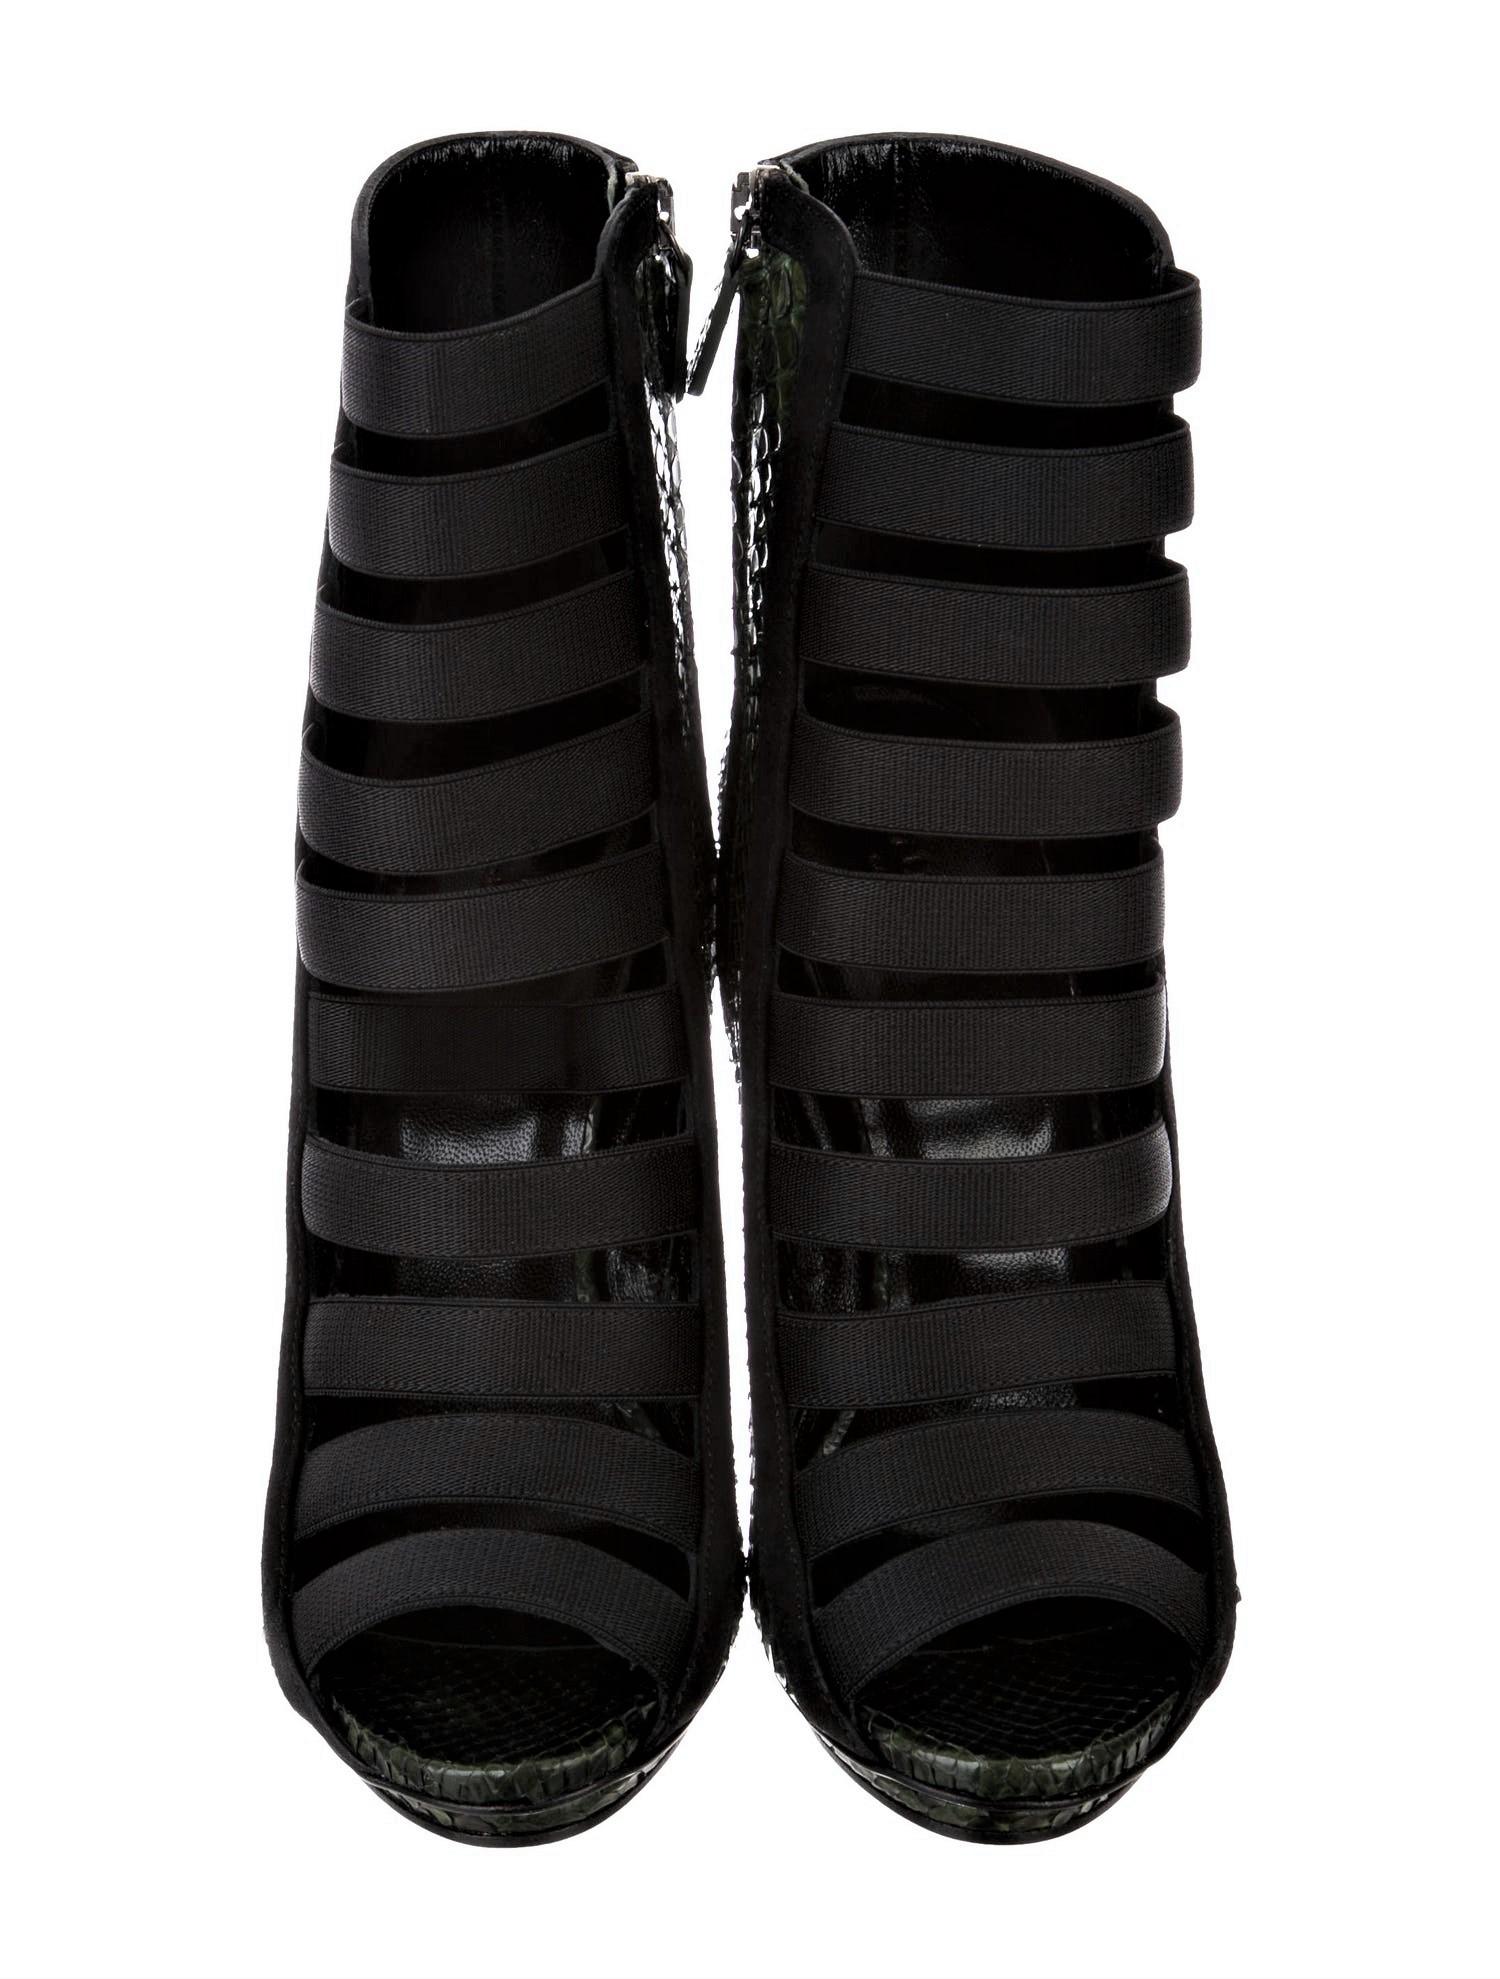 New Gucci Python Olympia S/S 2014 Runway Nicki Minaj Heels Booties Boots Sz 37.5 7